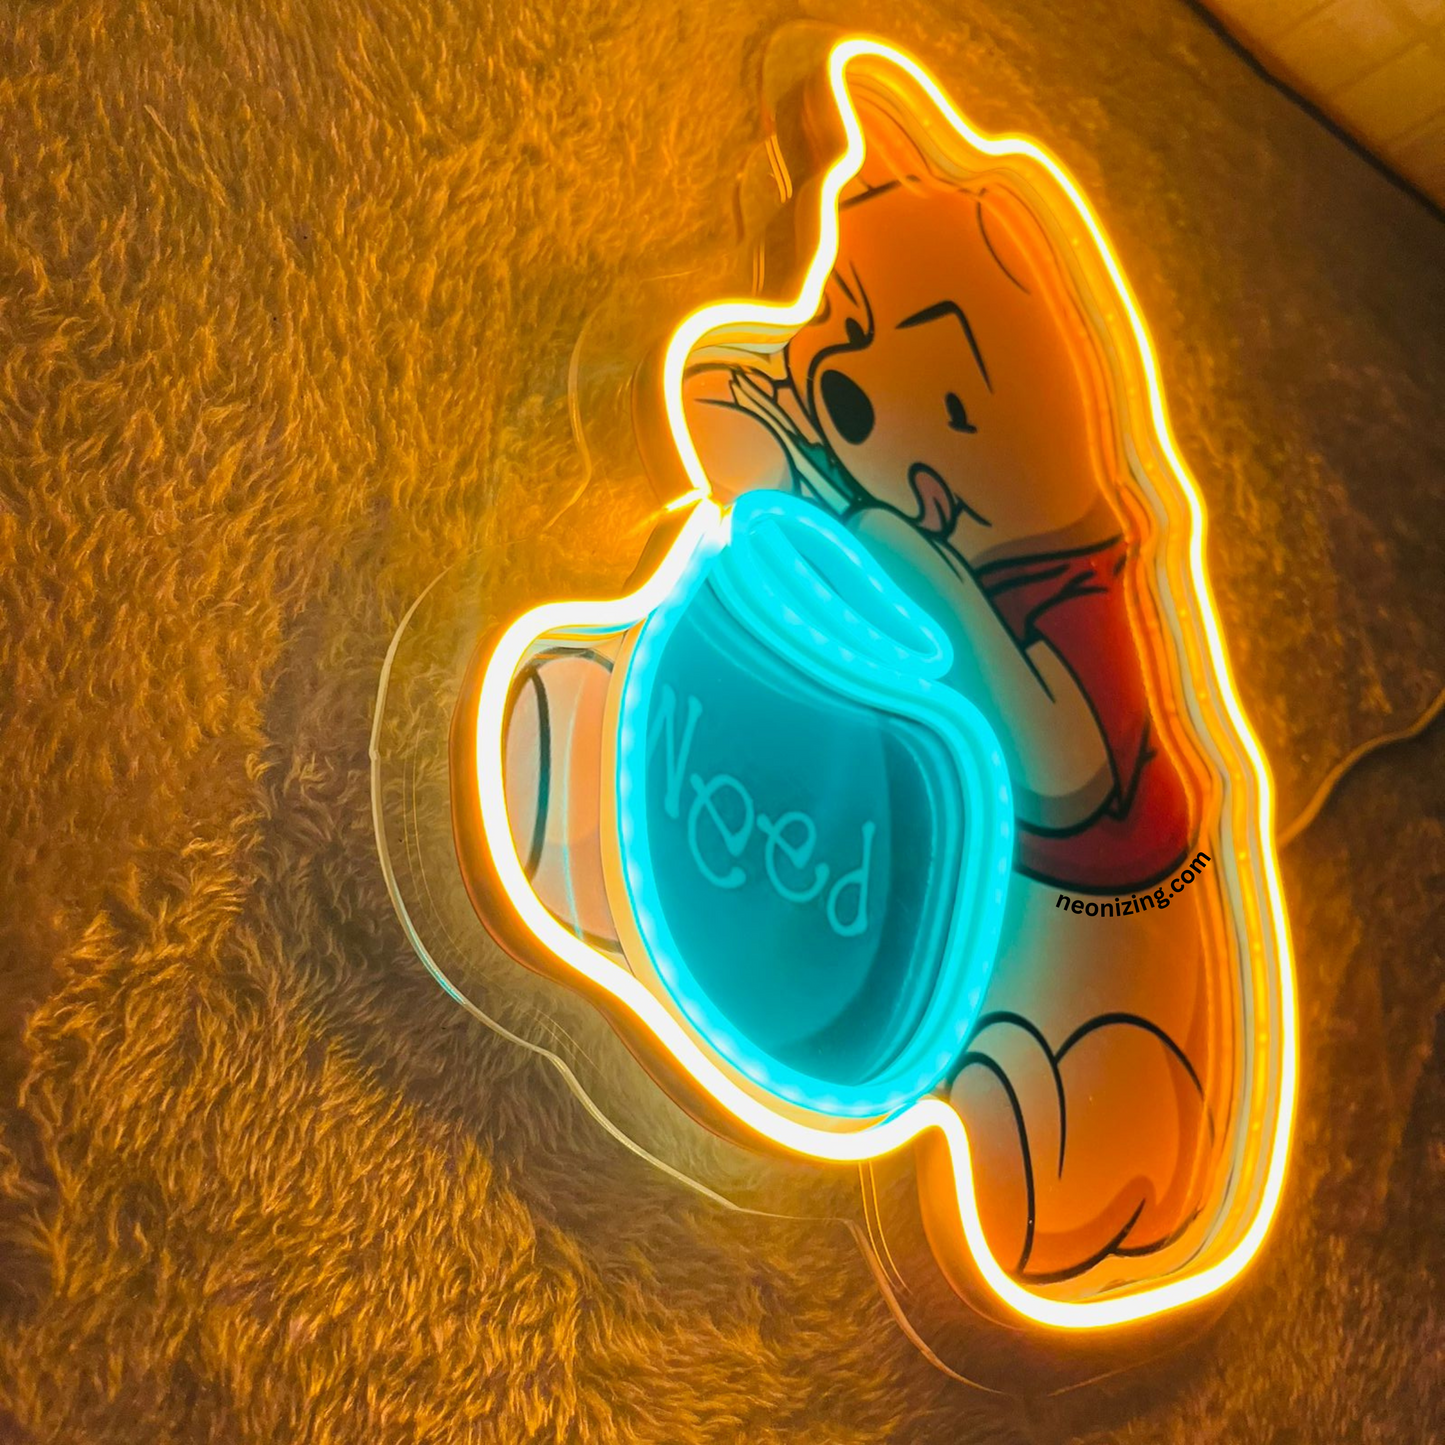 Tipsy Pooh Neon Artwork - Fuzzy Memories